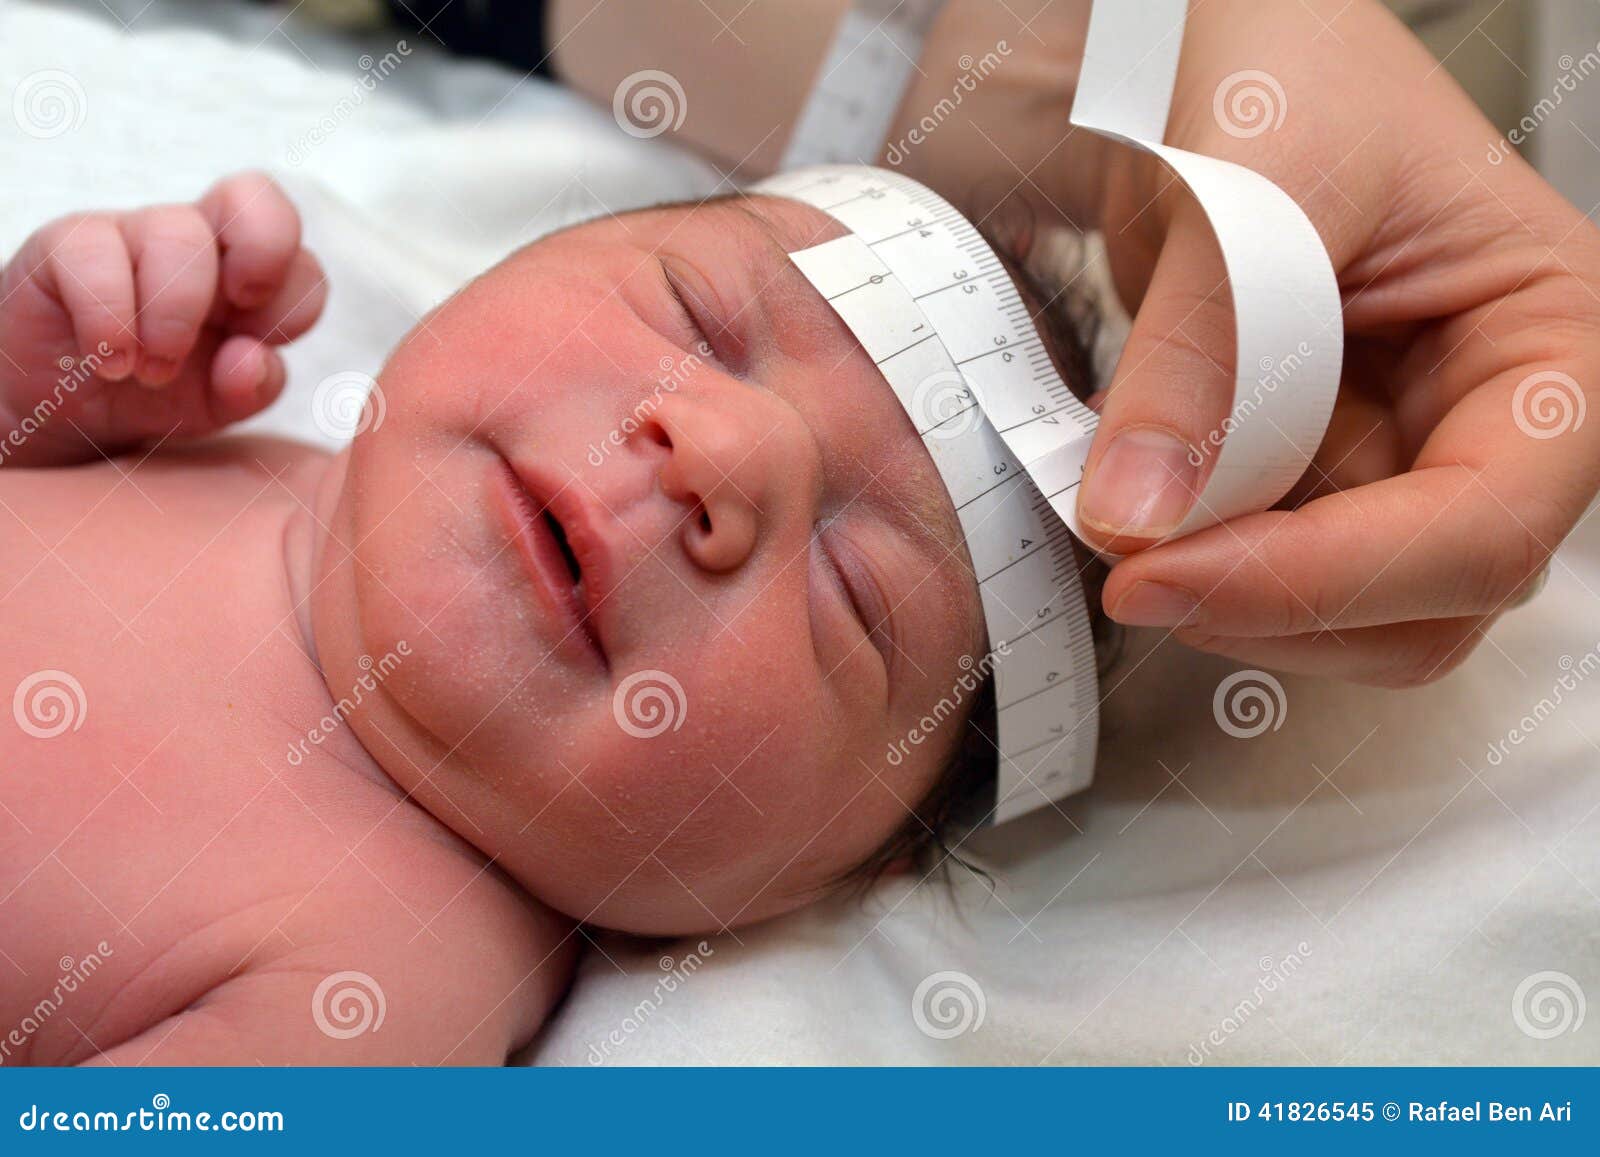 pregnancy - newborn baby head circumference